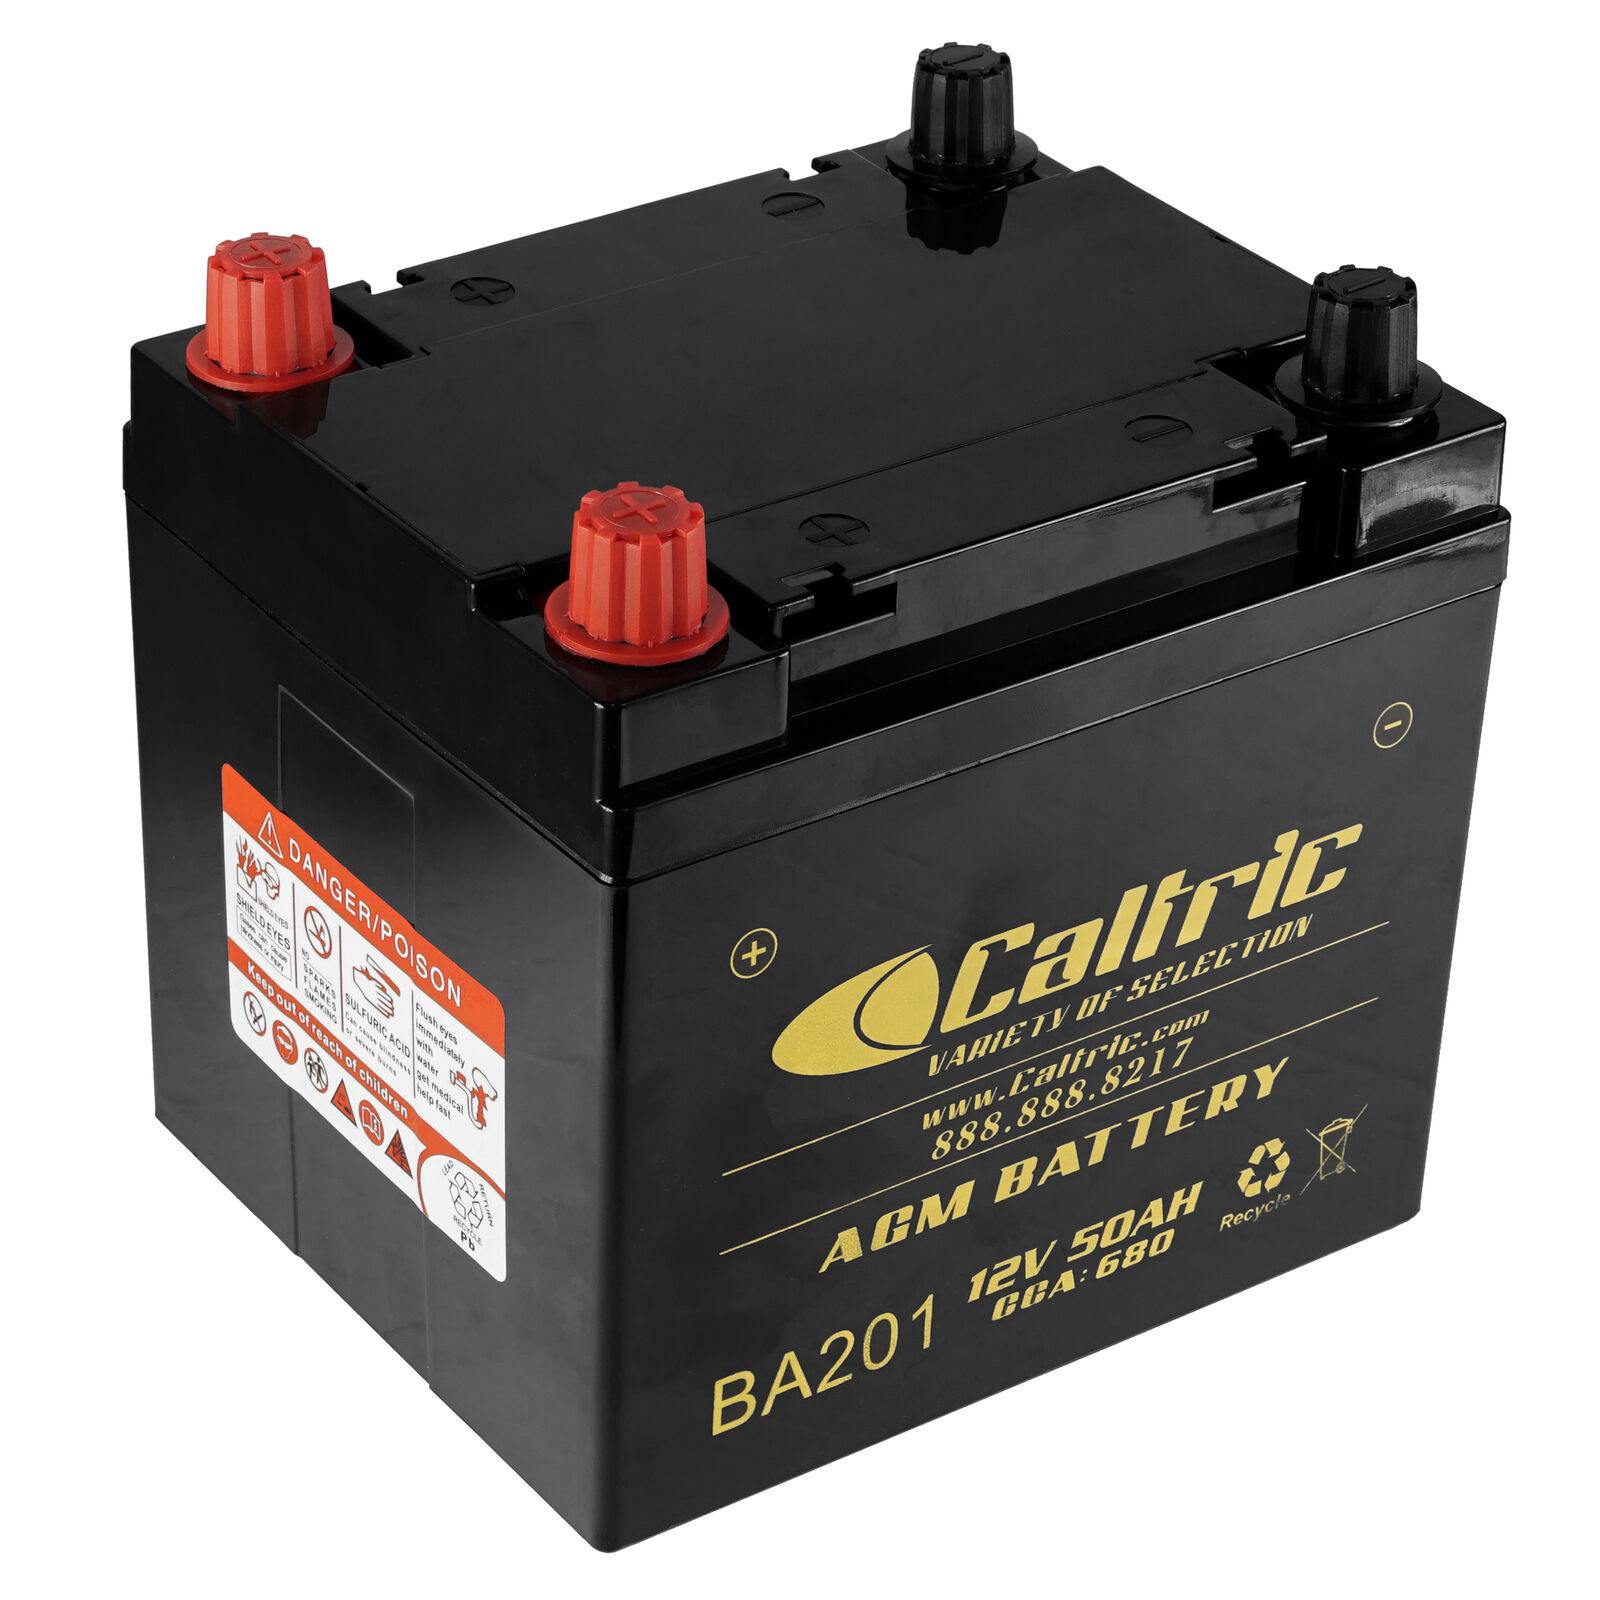 Caltric 4081481 AGM Battery for Polaris 12V 50Ah 680 CCA